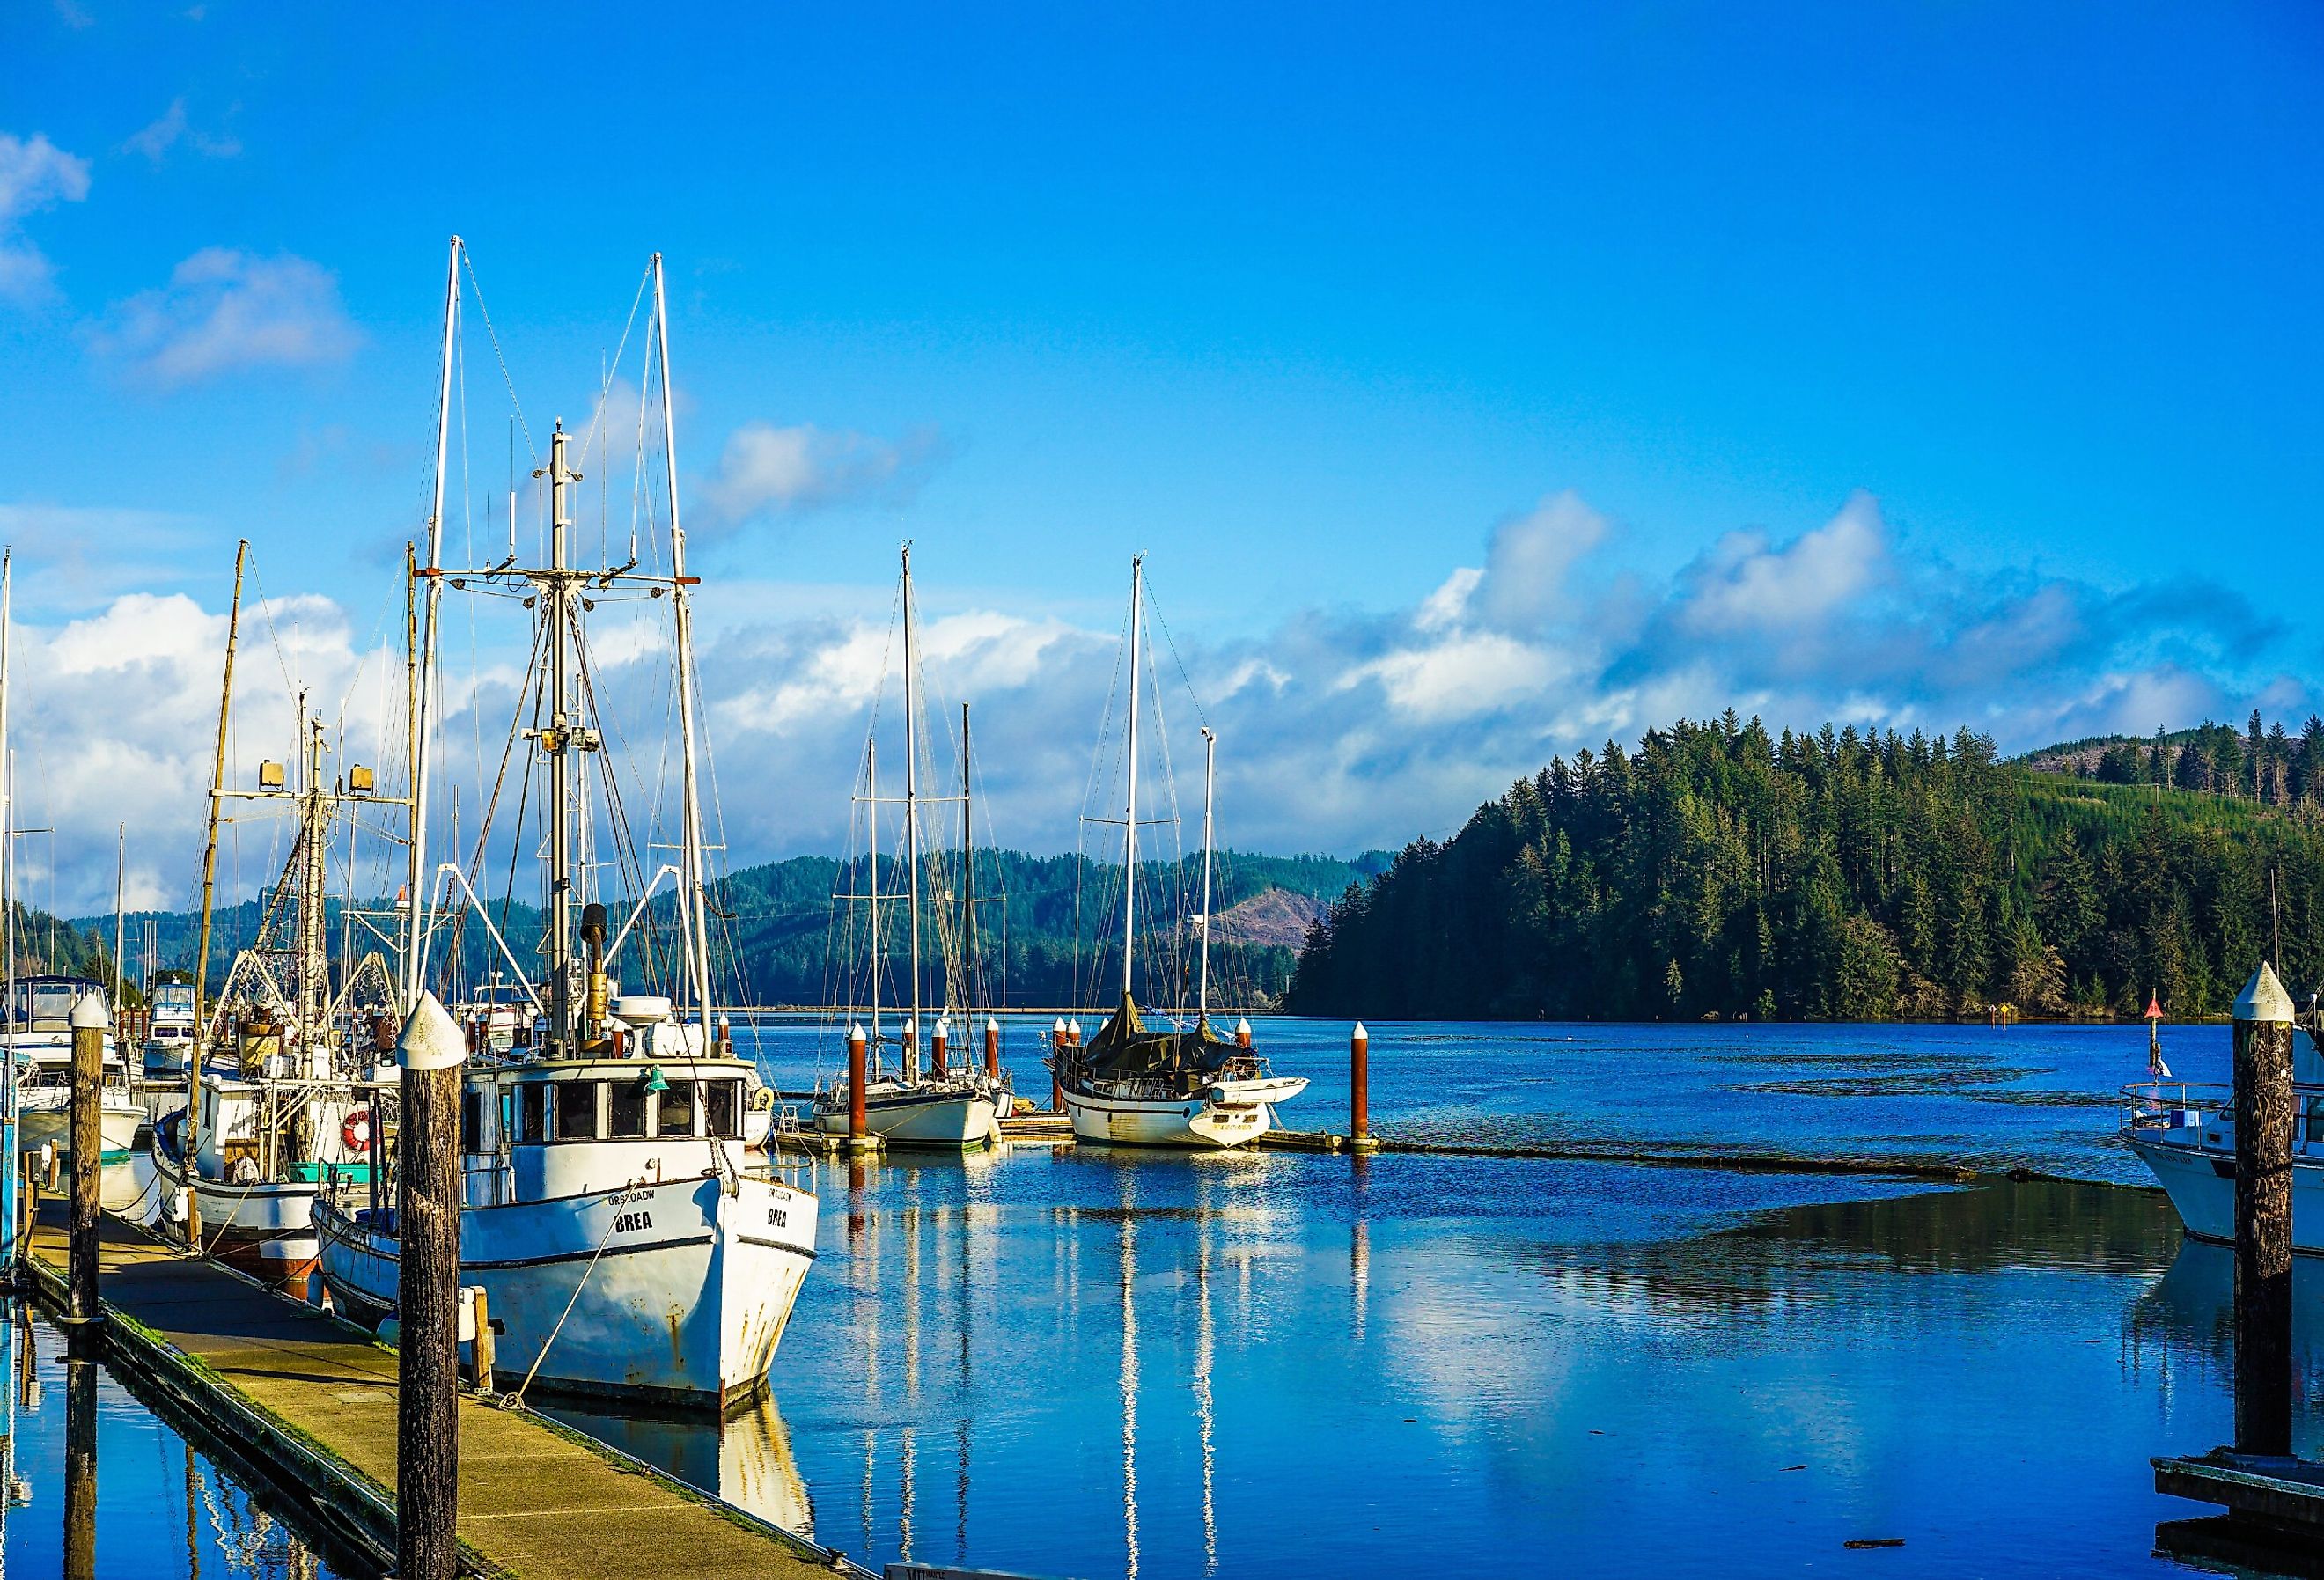 Small fishing harbor in Florence, Oregon. Image credit NeungPH via Shutterstock